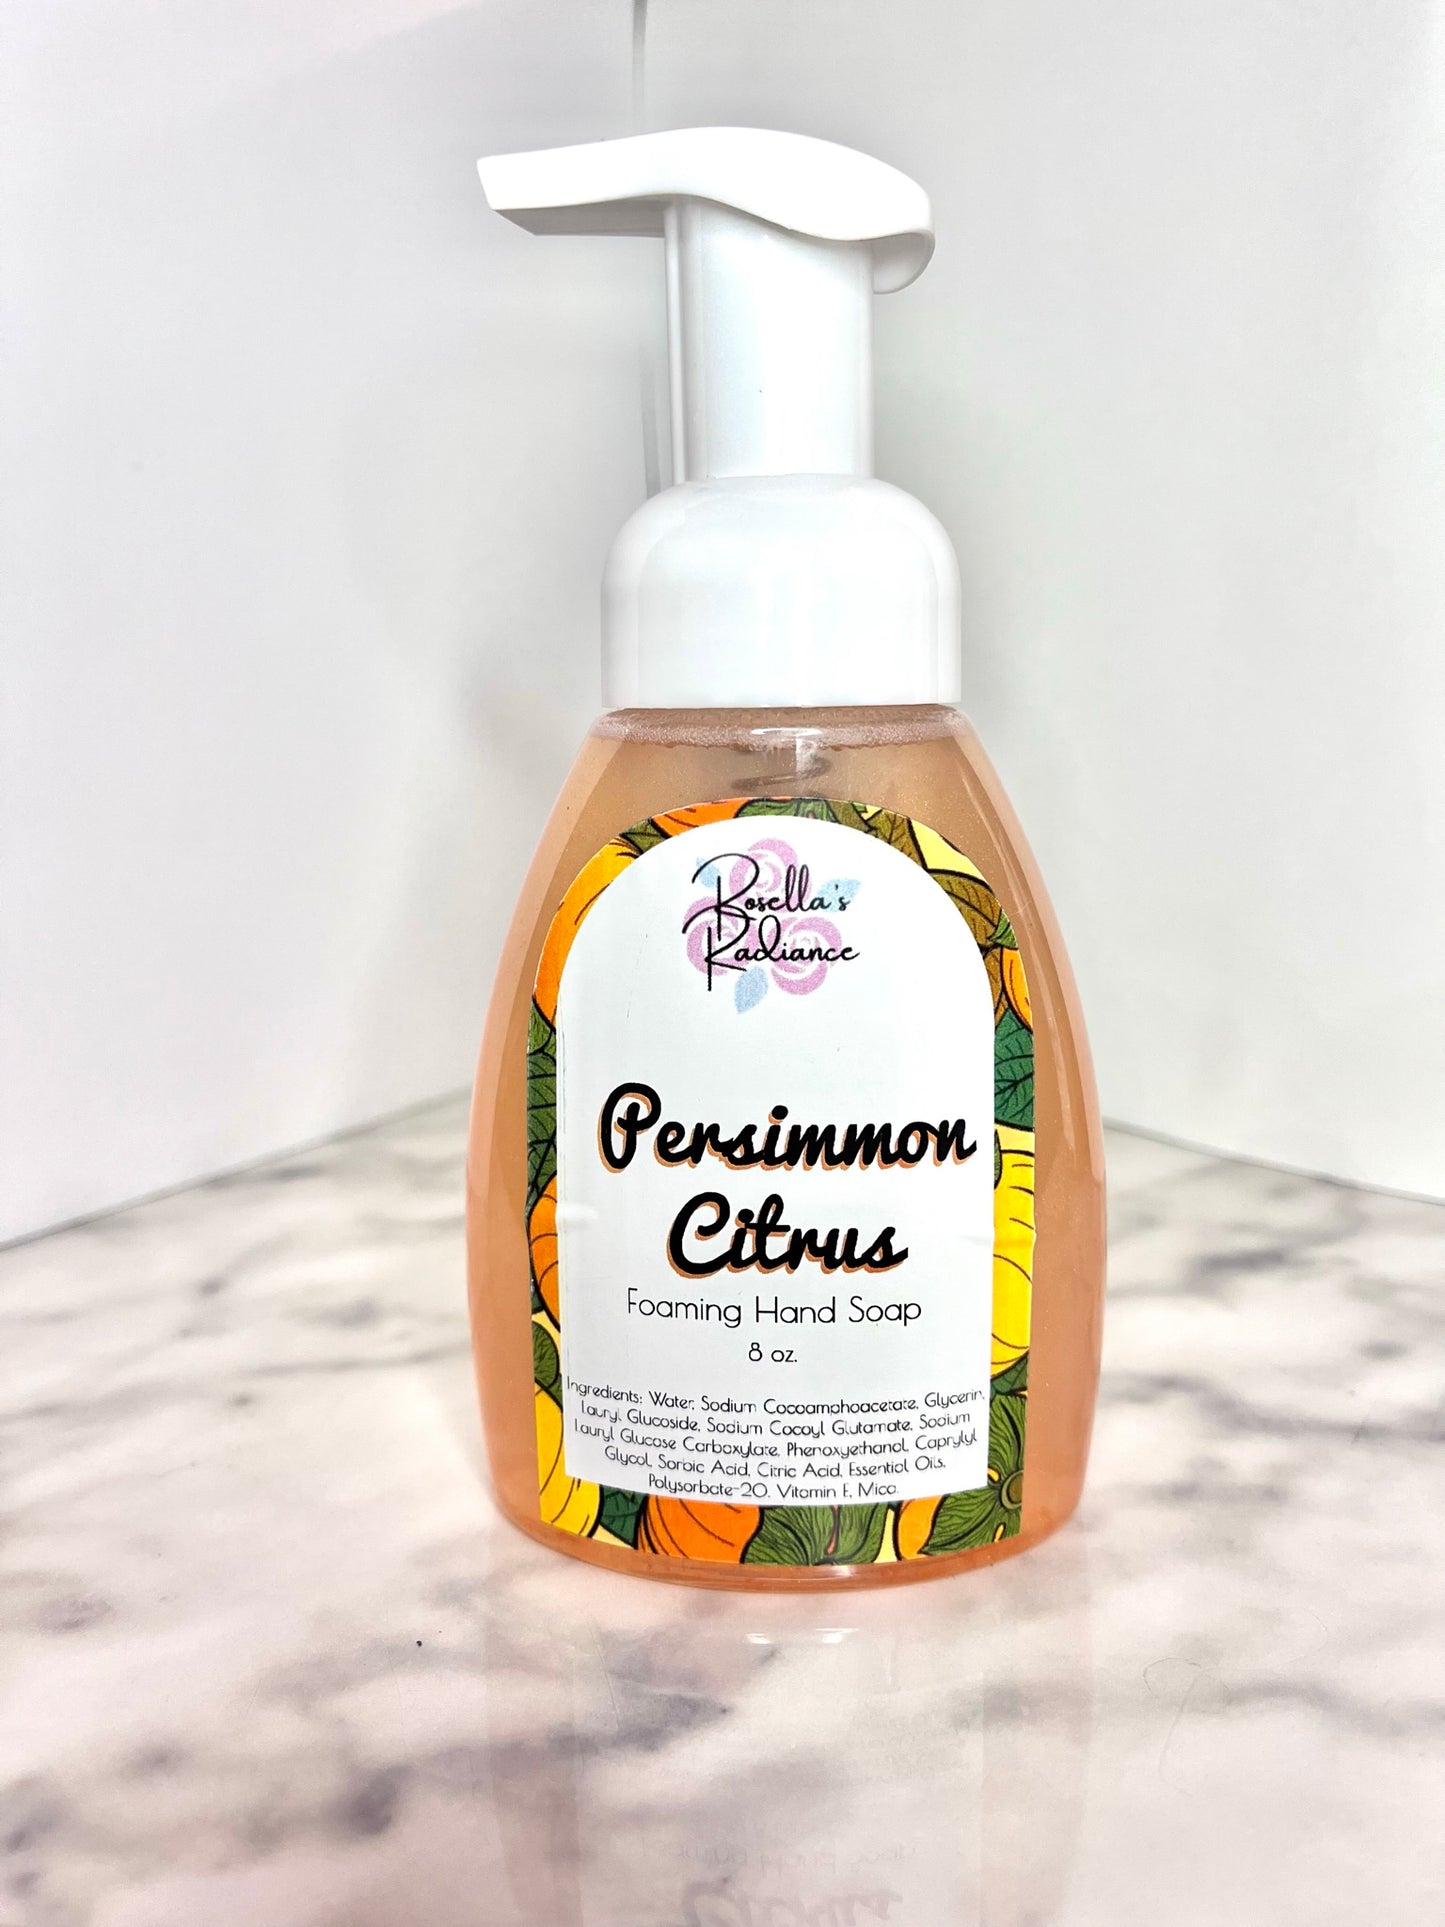 Persimmon Citrus Foaming Hand Soap